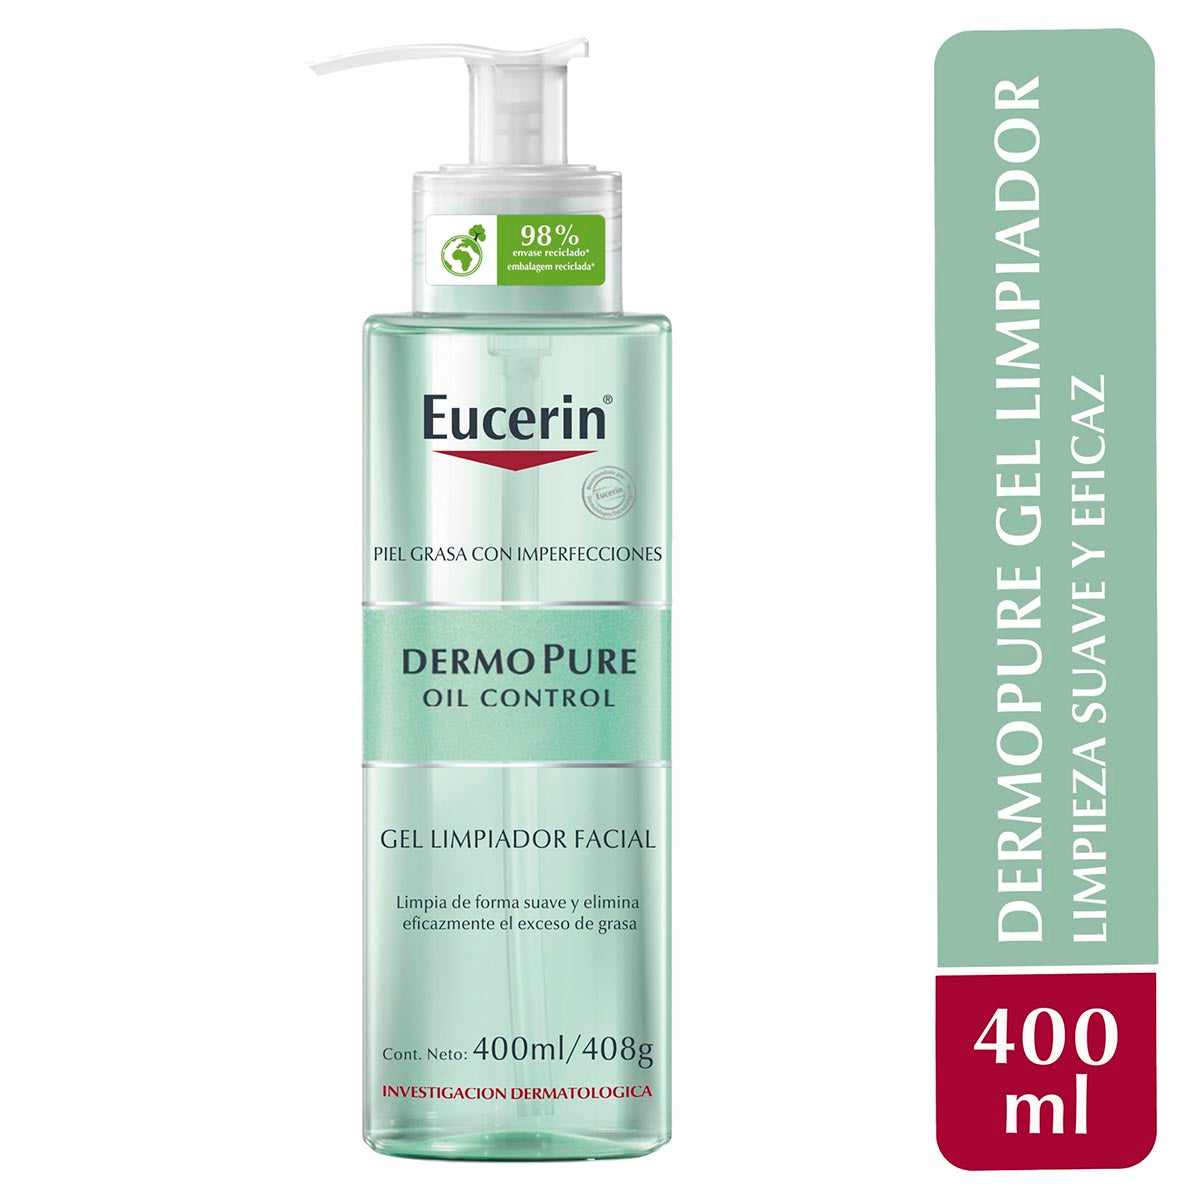 Eucerin protector solar facial fluido anti-edad FPS 50 50ml. – Derma  Express MX